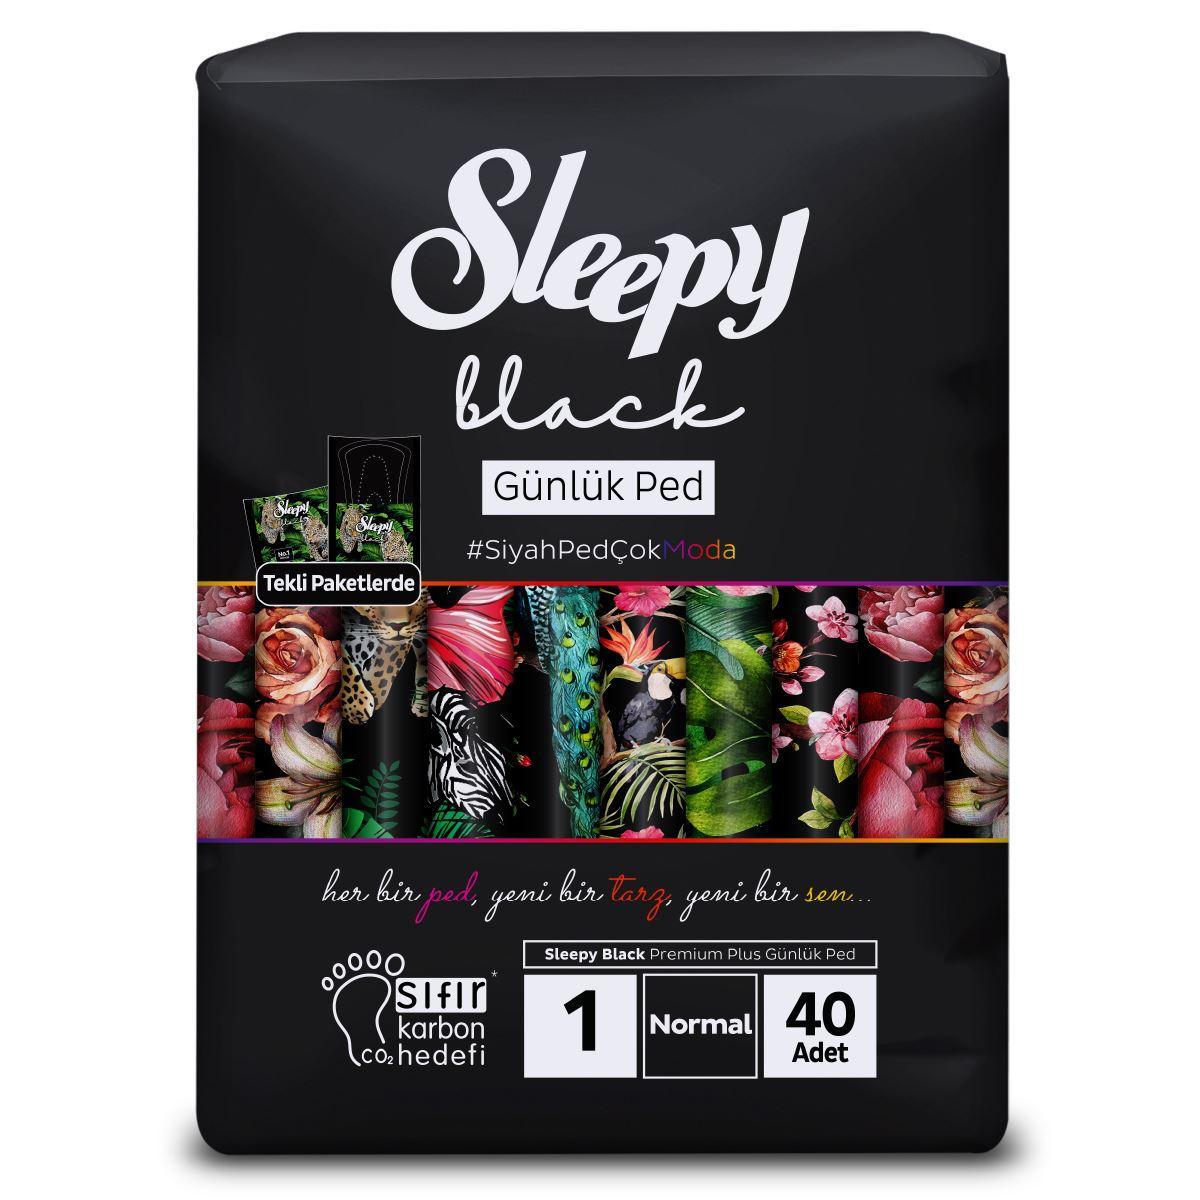 Sleepy Black Premium Plus Günlük Ped Normal 40x6 240 Adet Ped